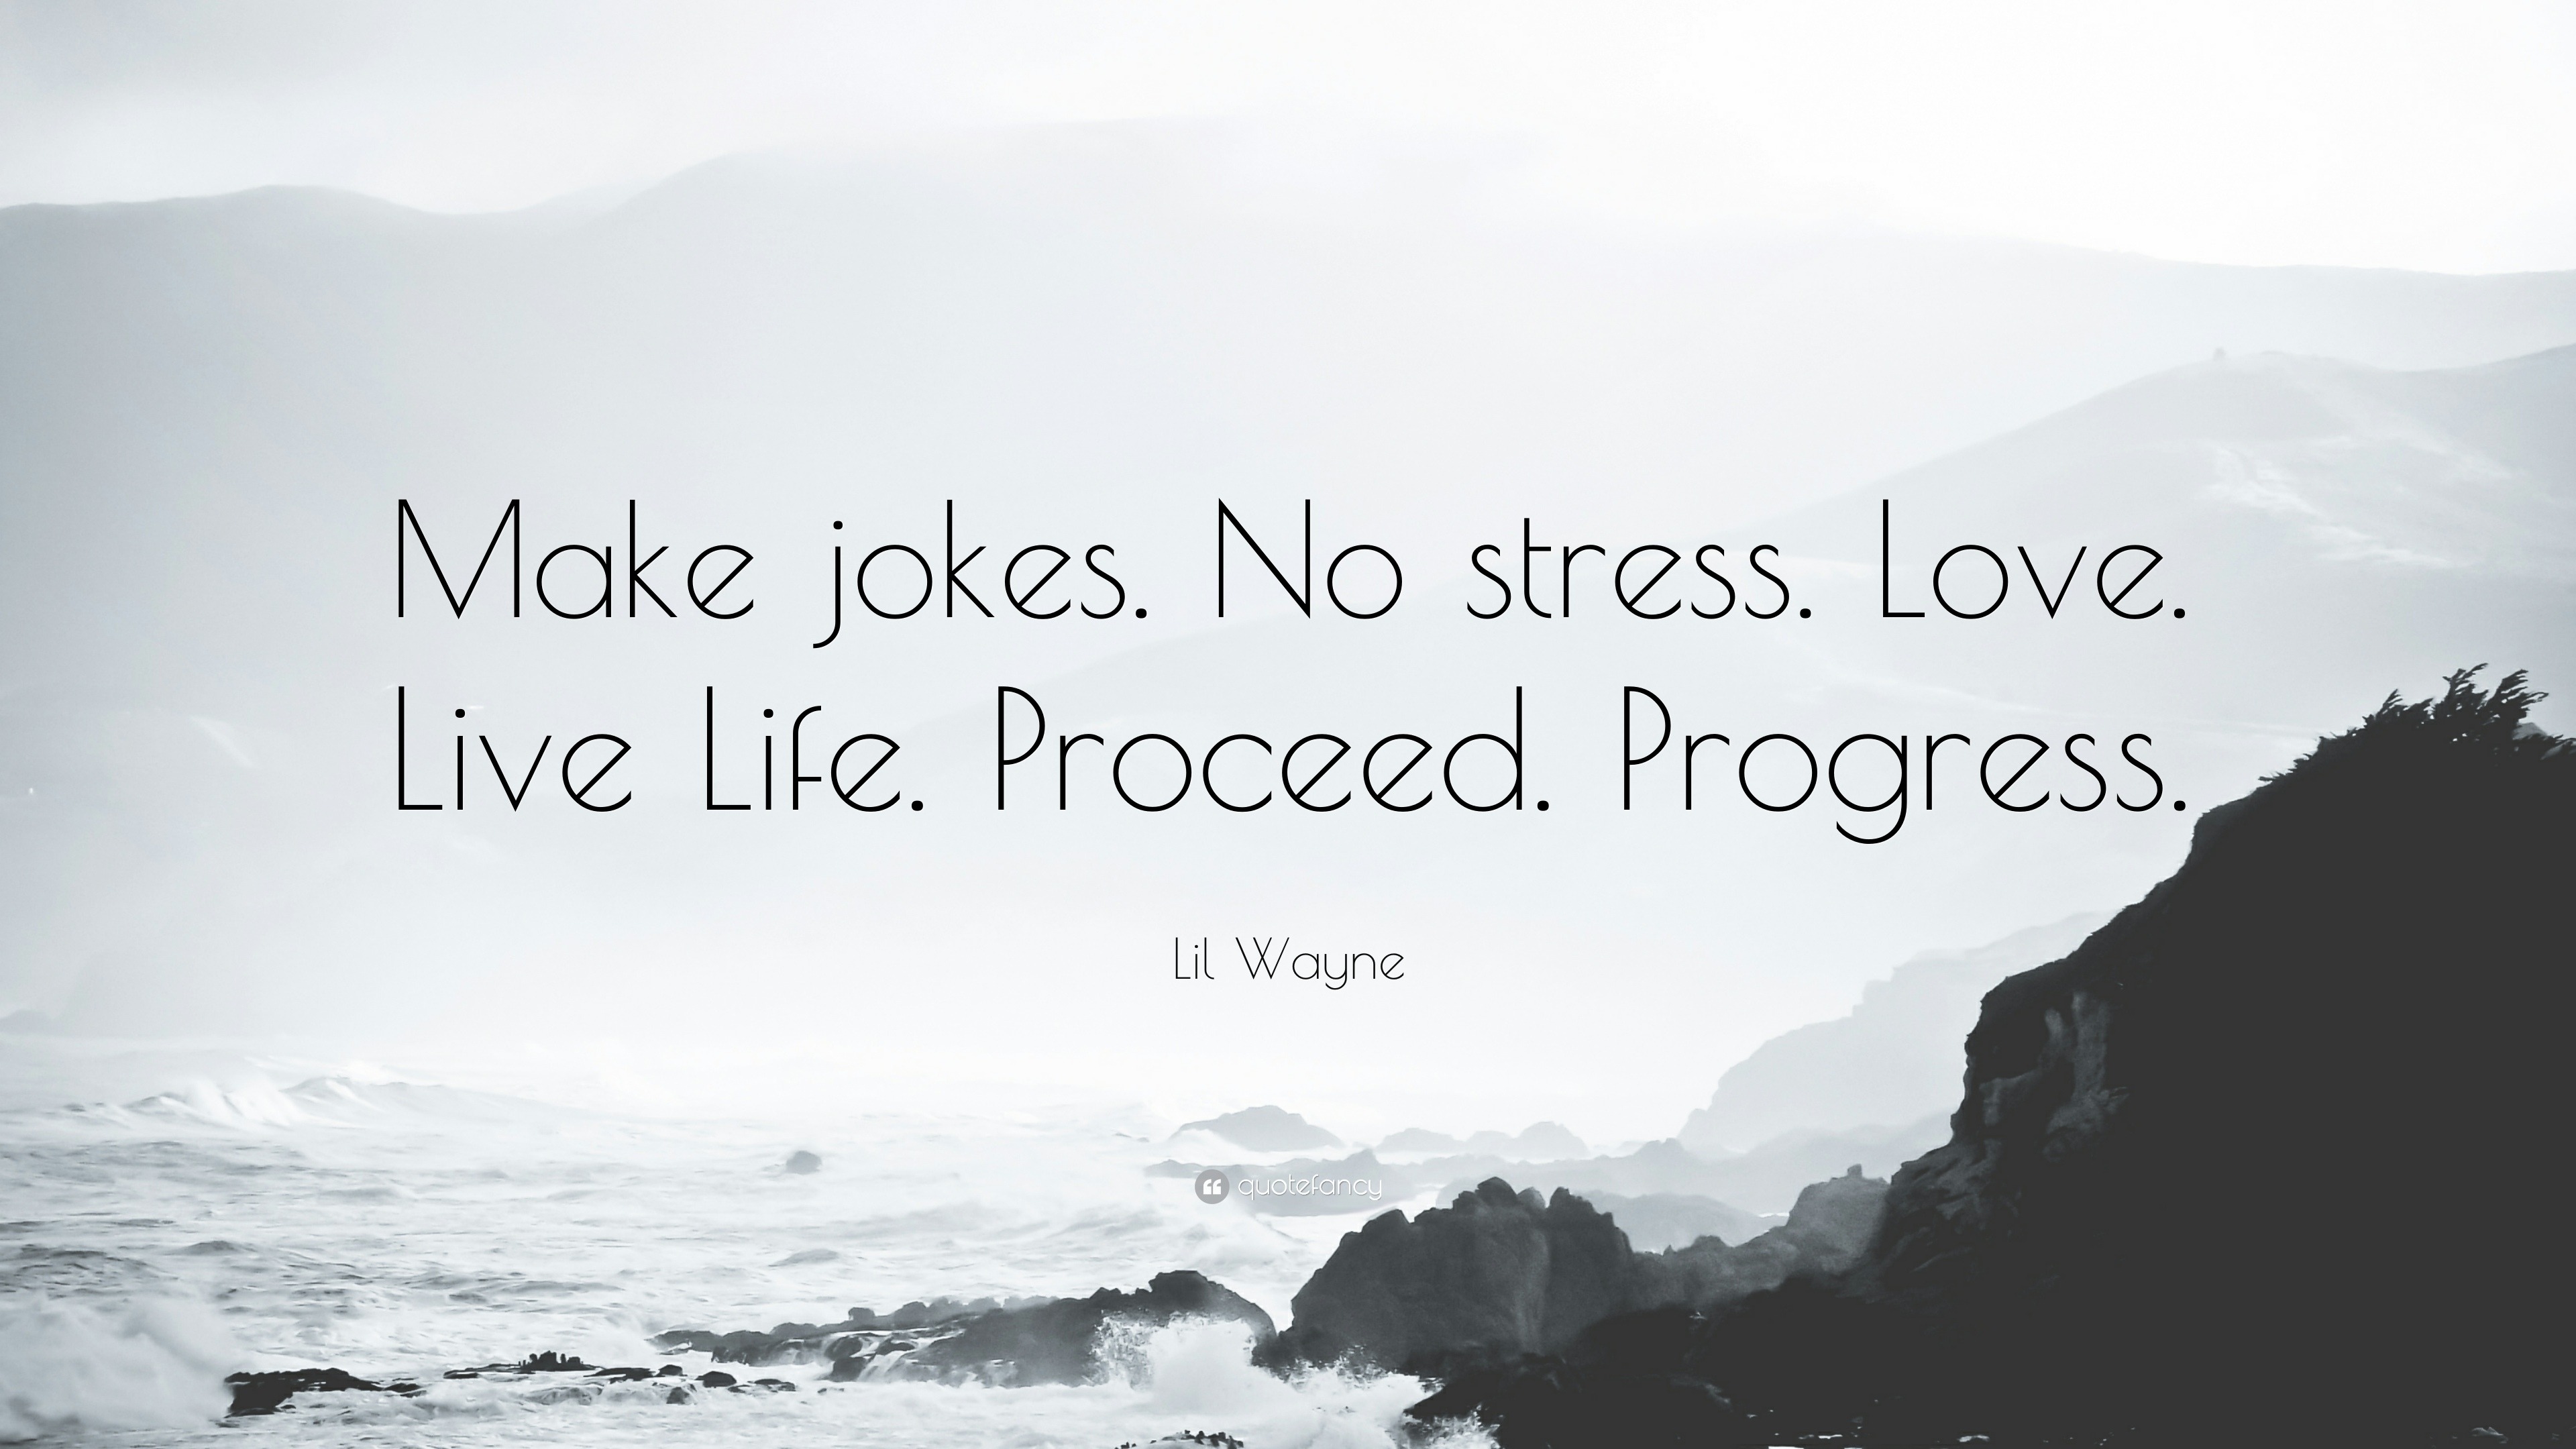 Lil Wayne Quote “Make jokes No stress Love Live Life